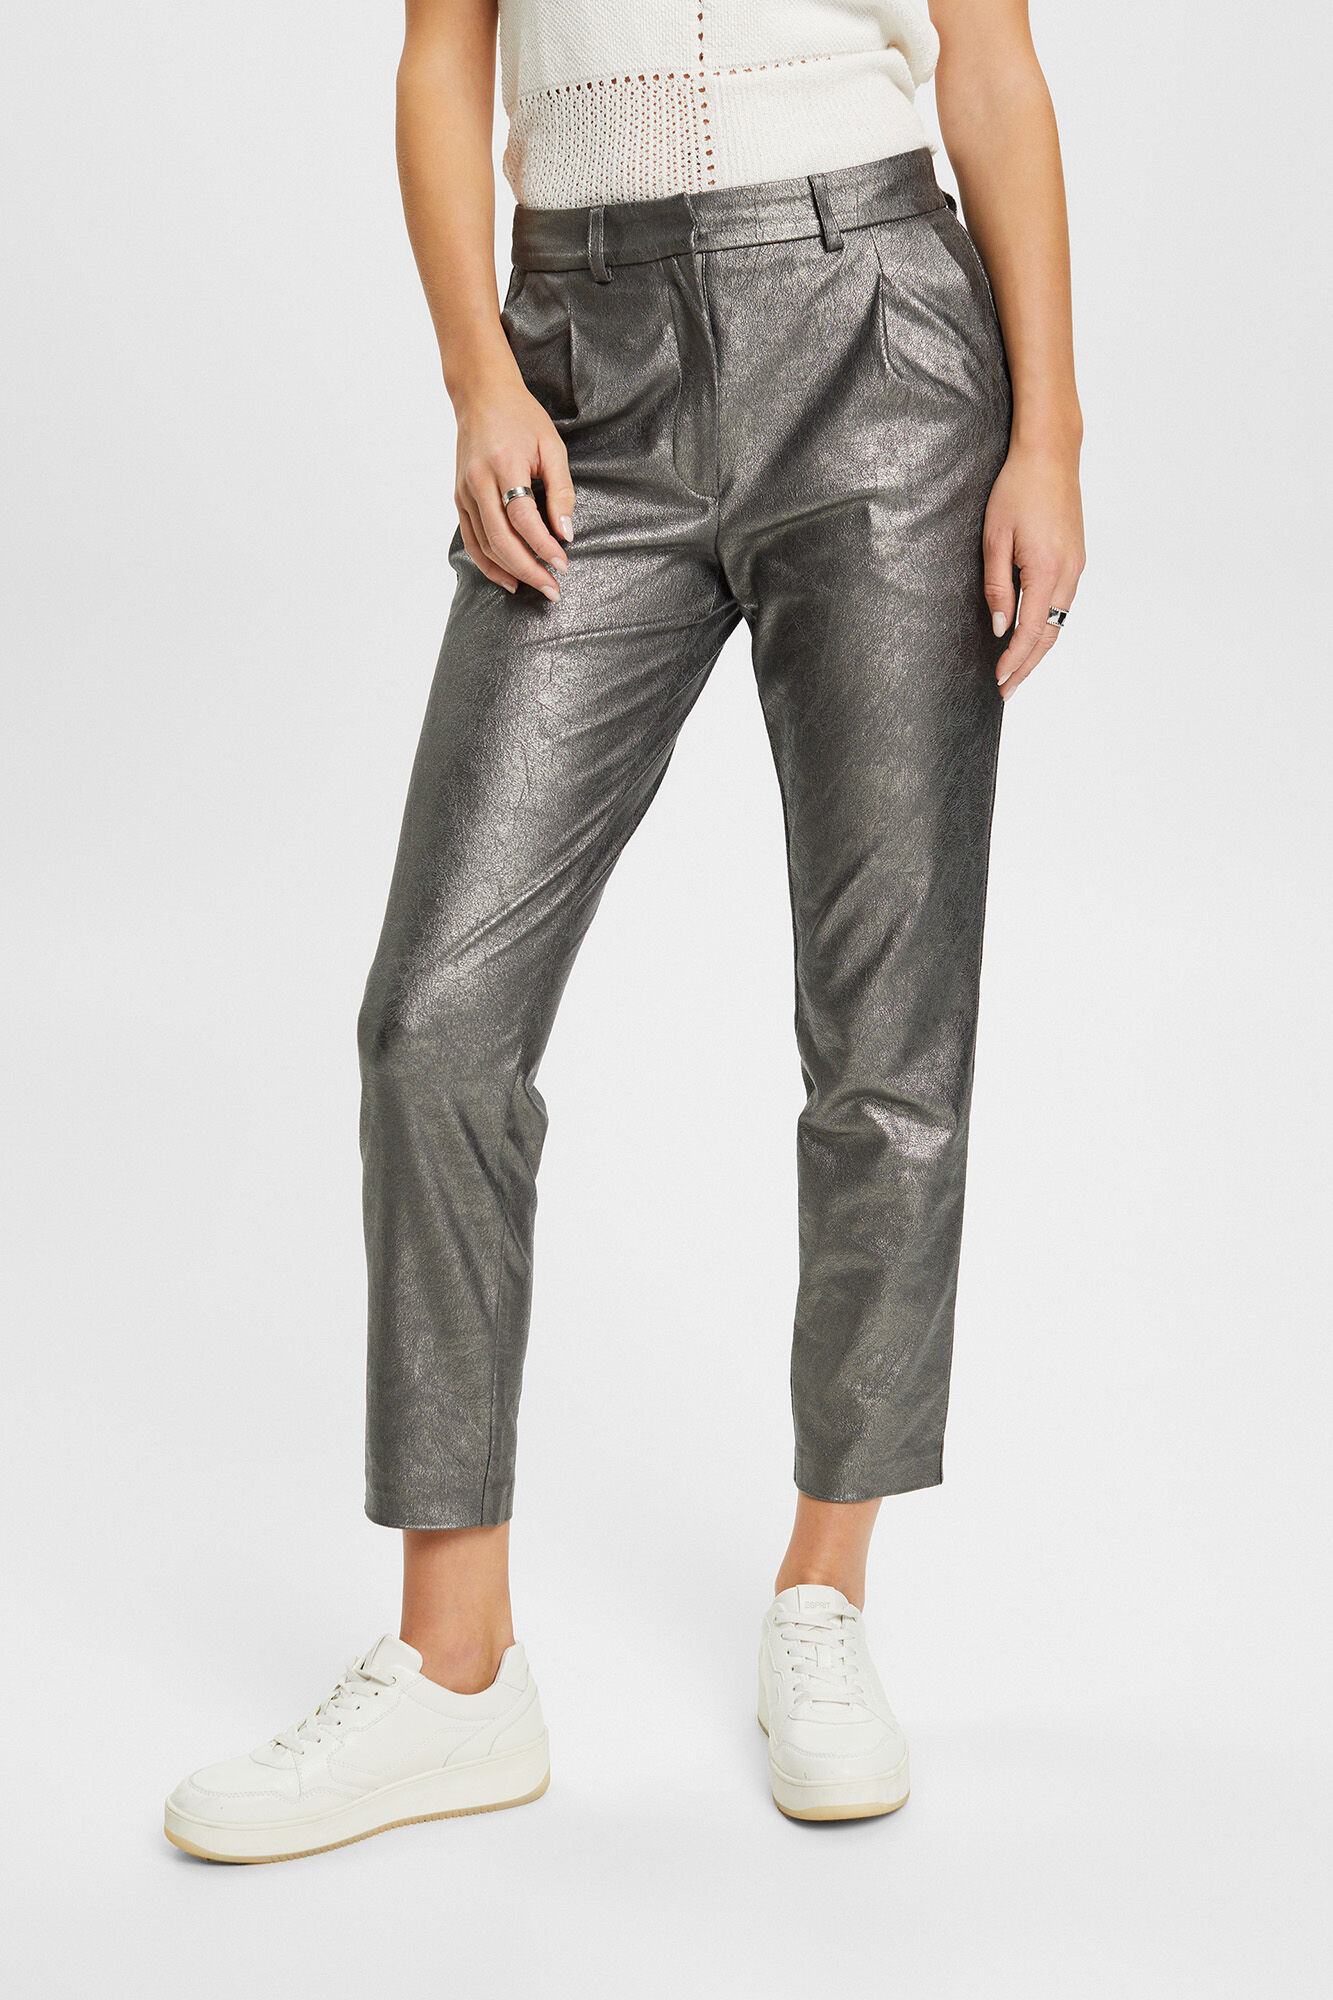 Zara | Pants & Jumpsuits | Zara Loosefitting Darted Trousers | Poshmark